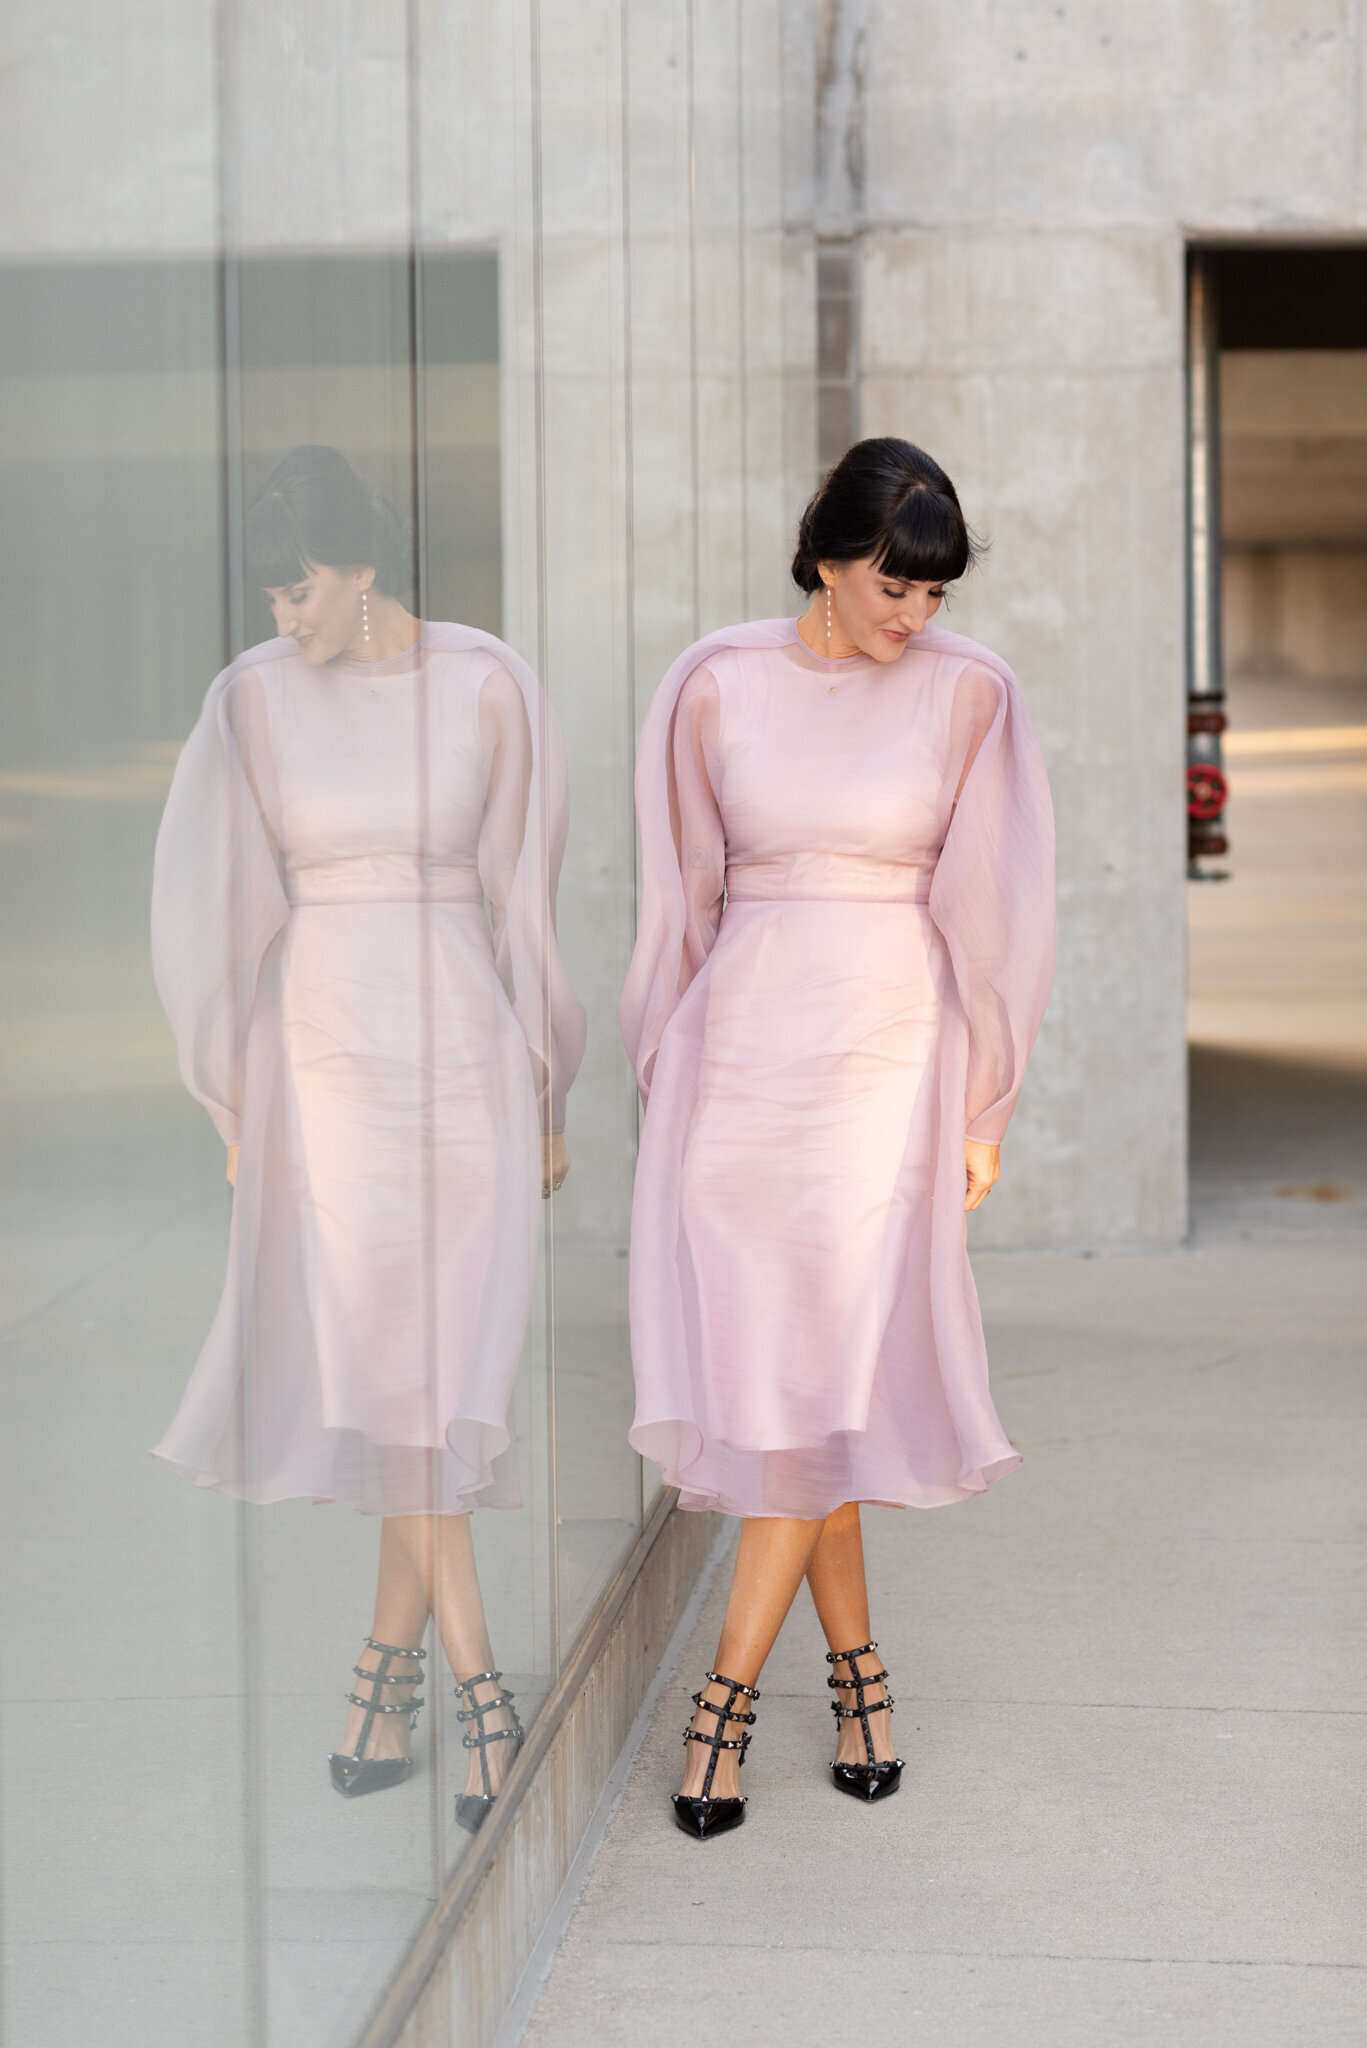 Woman-wearing-pink-dress-for-gala-iowa-city-photography